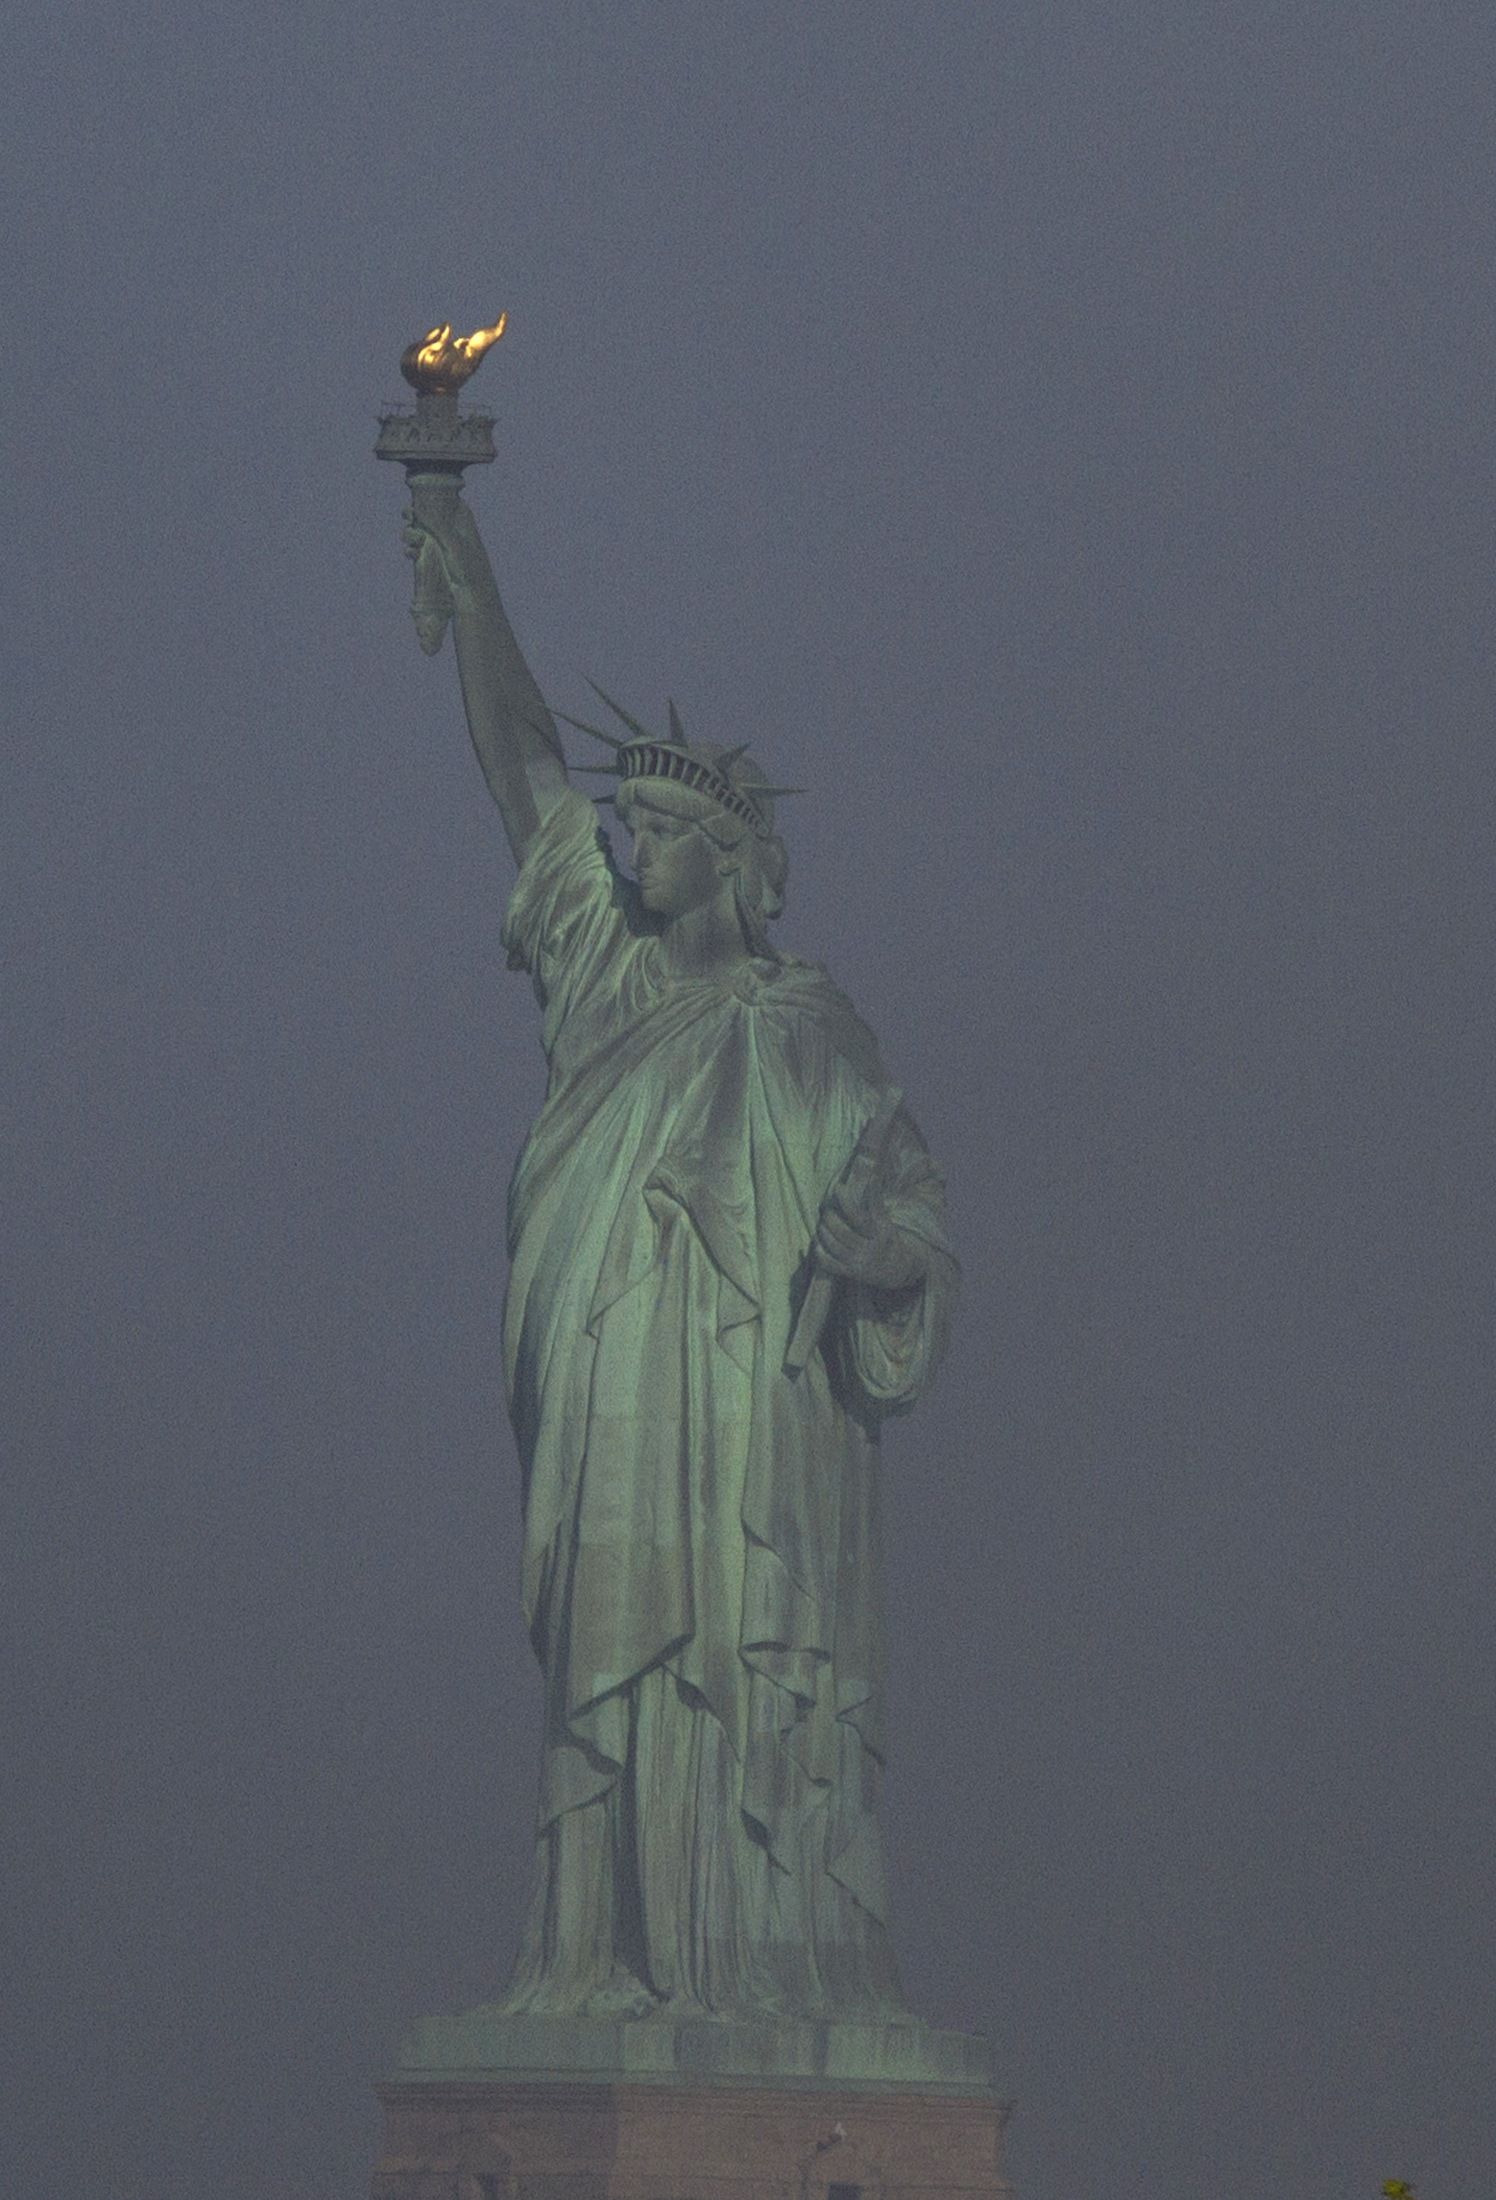 Statue of Liberty-4-June 9, 2013